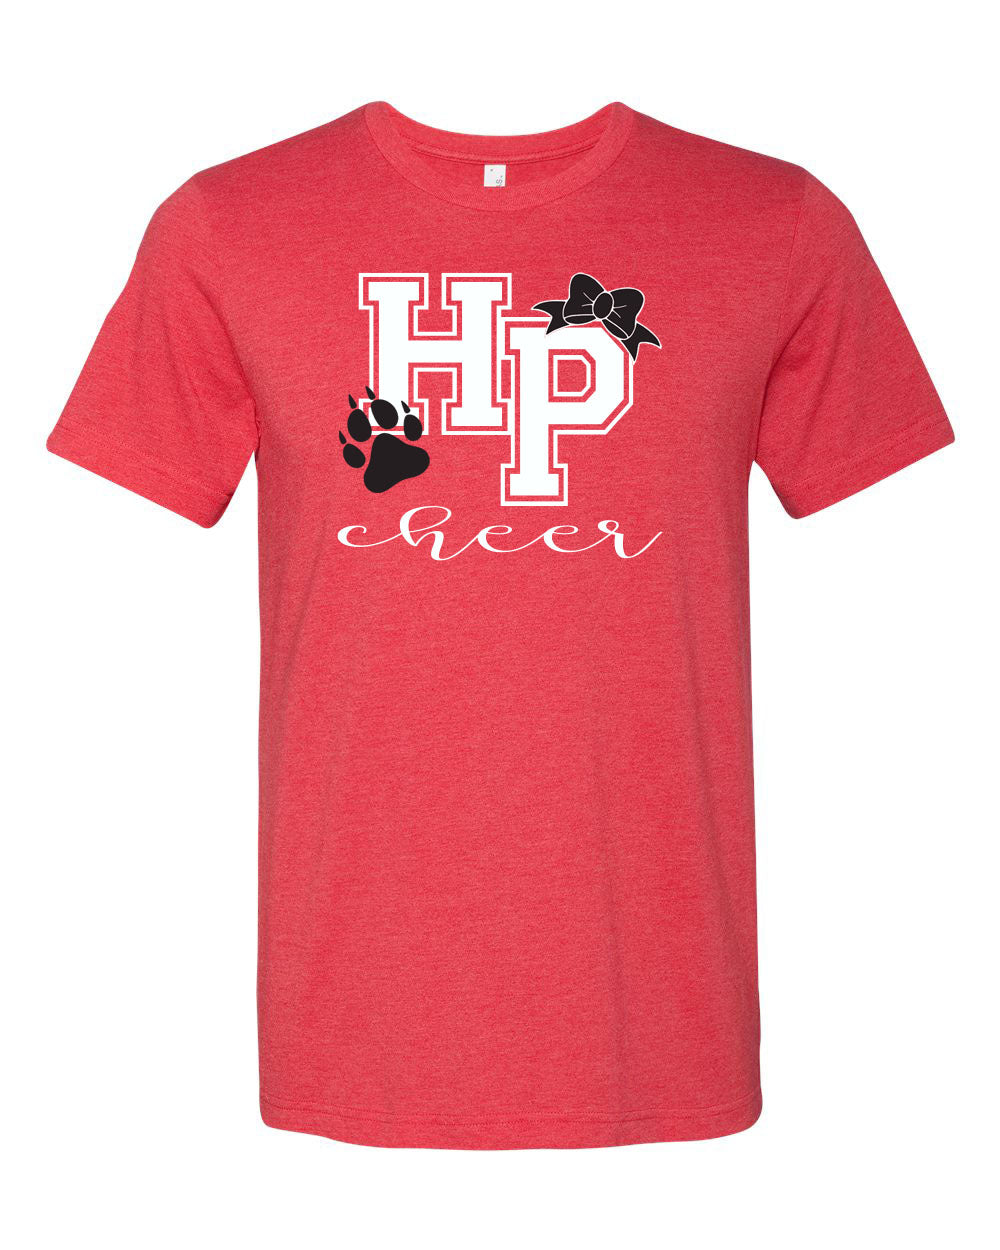 High Point Cheer design 3 T-Shirt